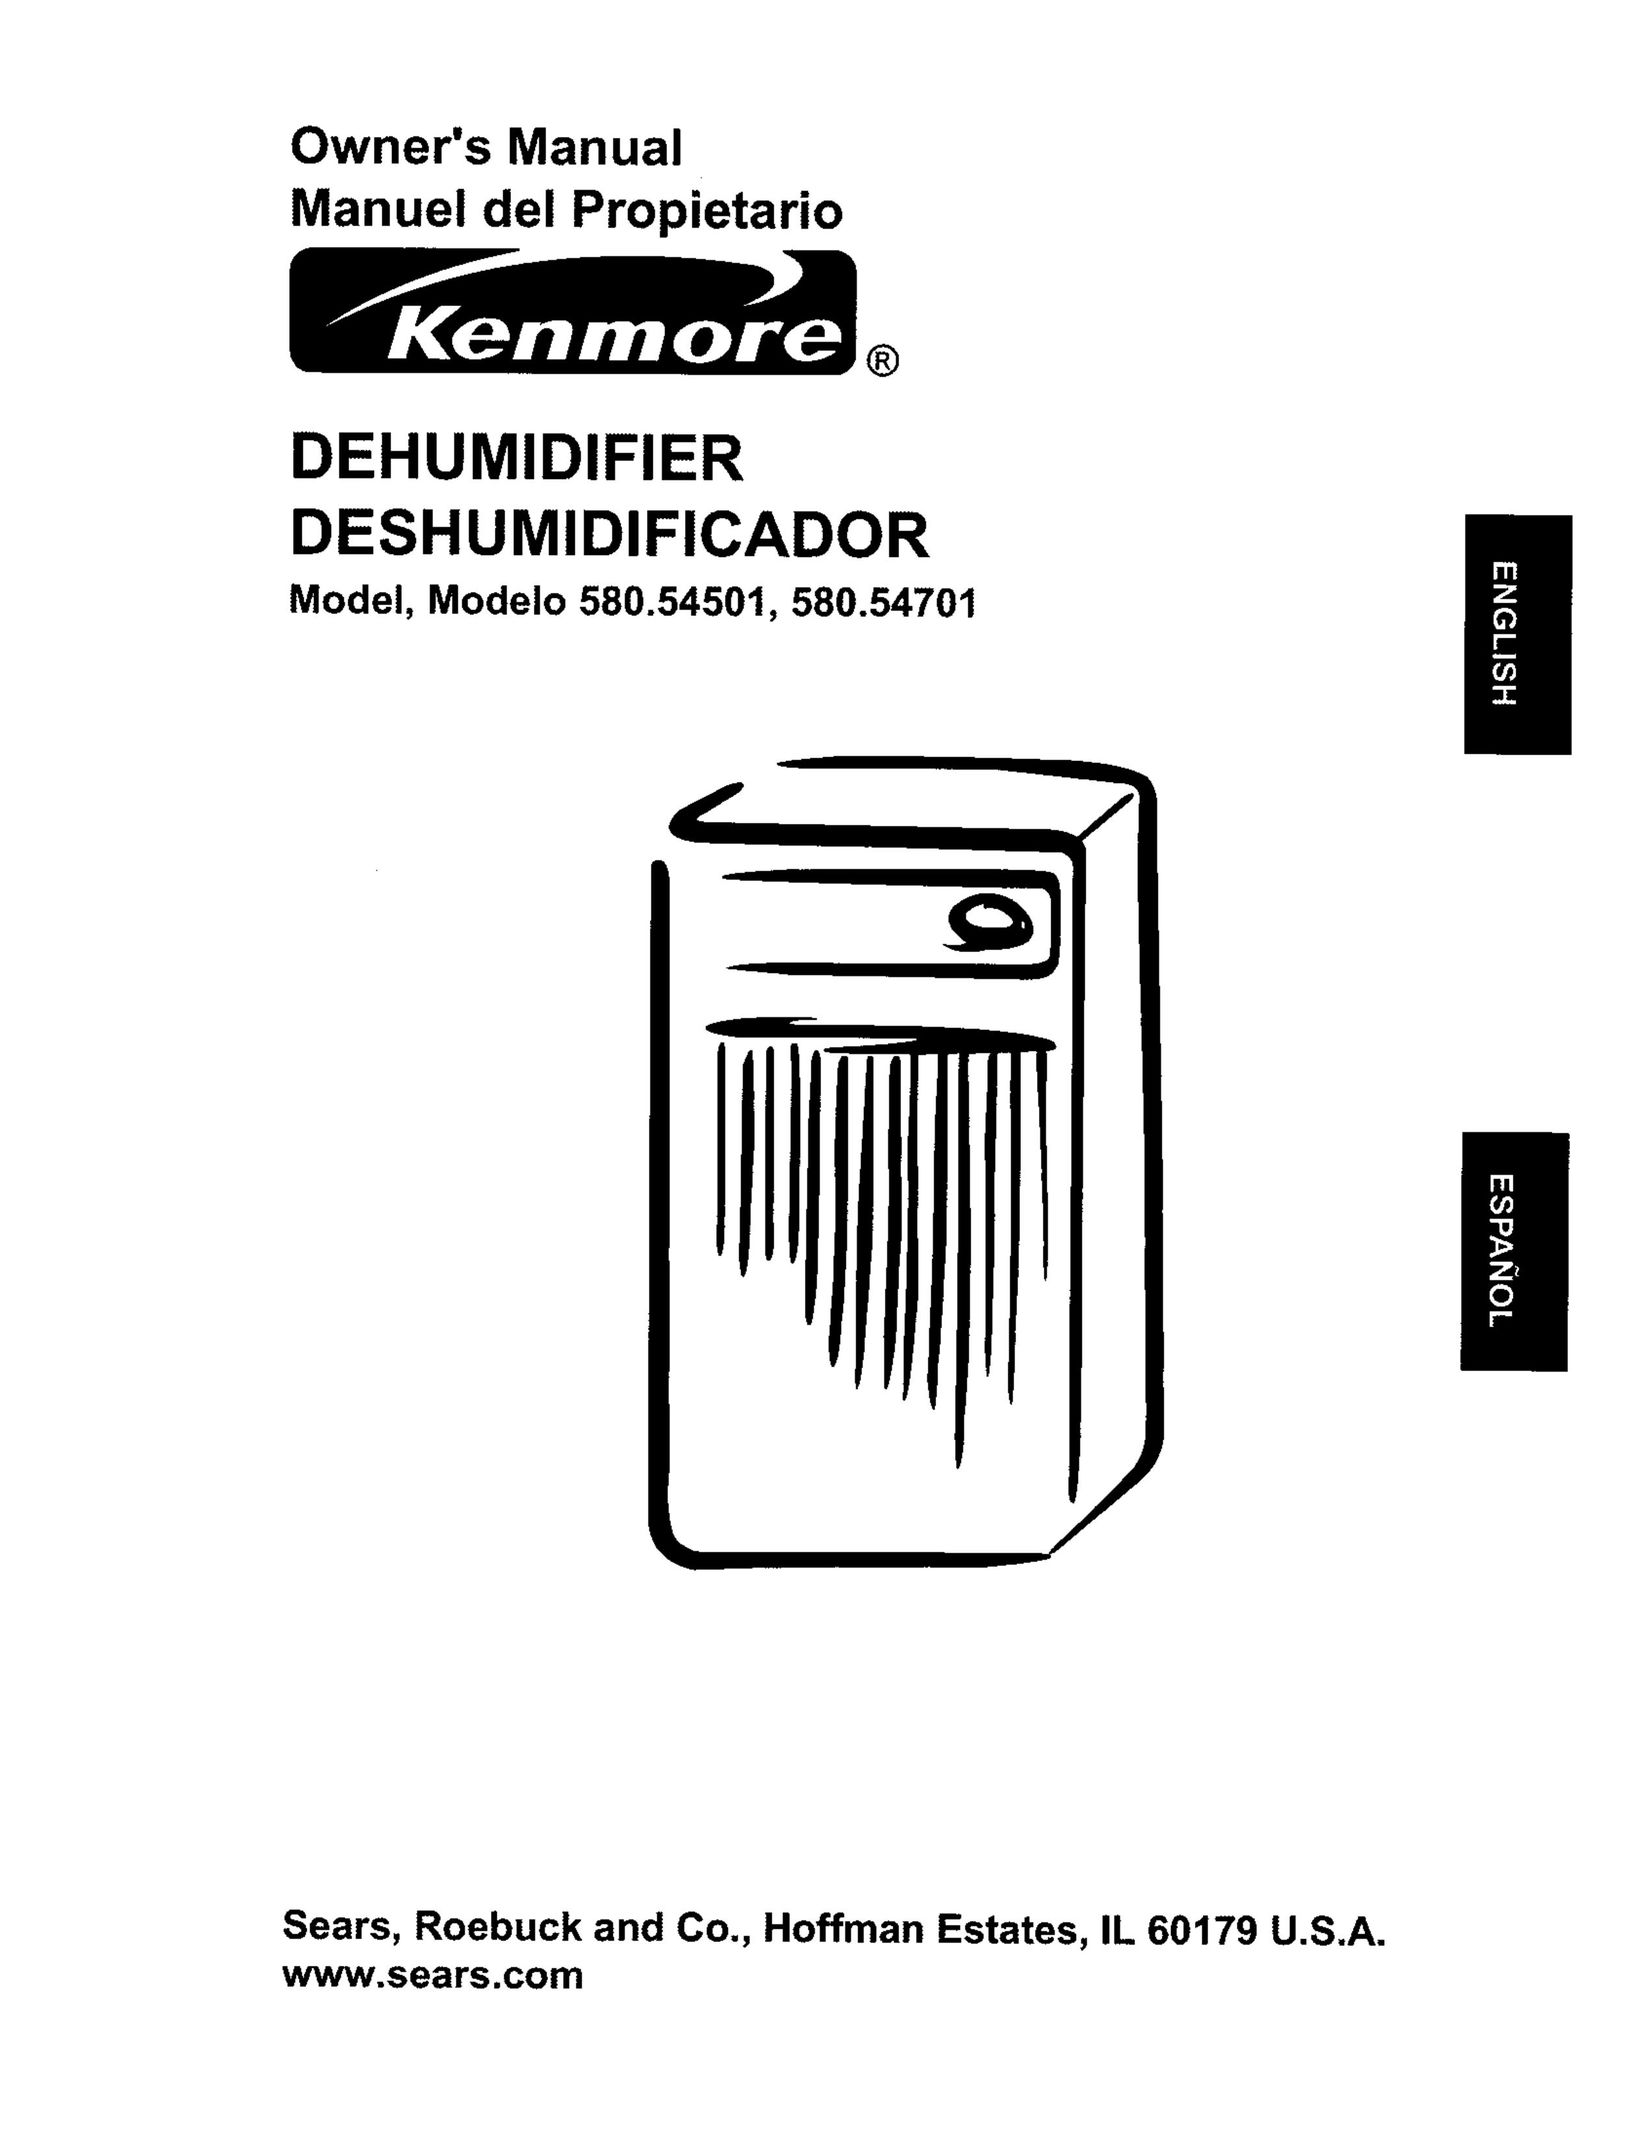 Kenmore 580.54701 Dehumidifier User Manual